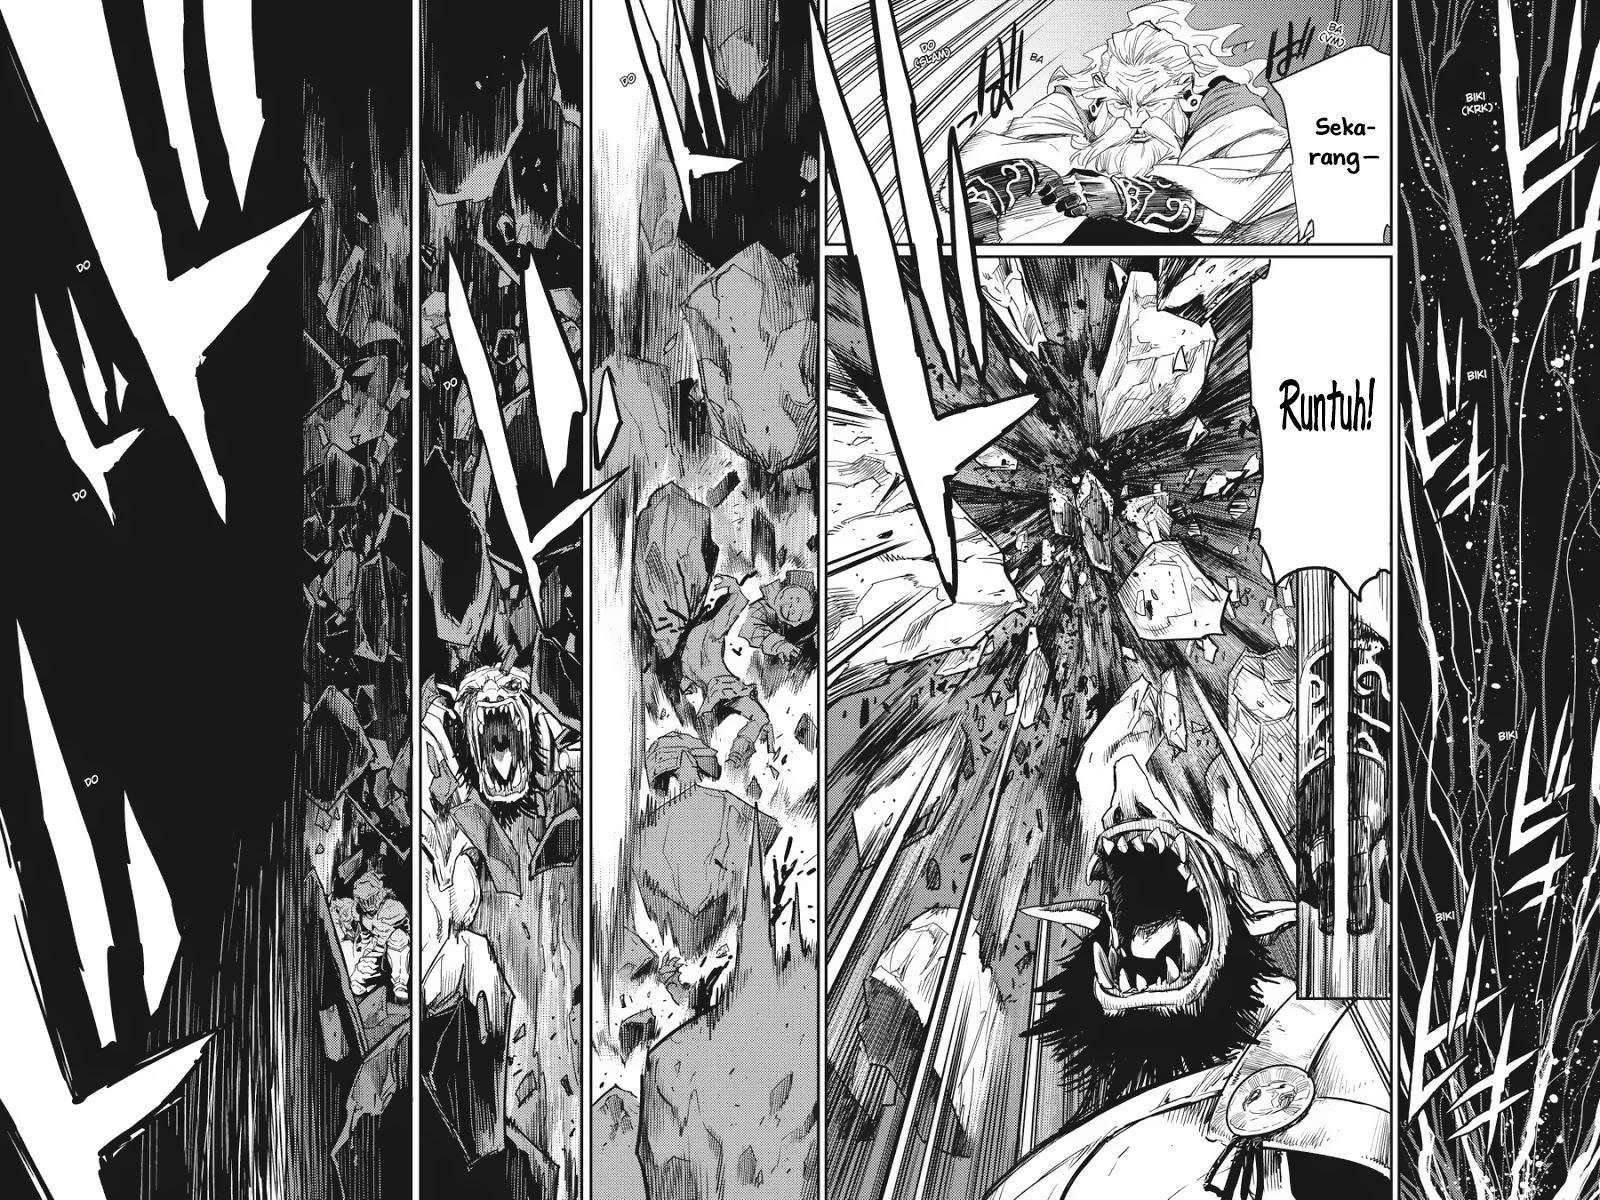 Goblin Slayer Chapter 28 Bahasa Indonesia